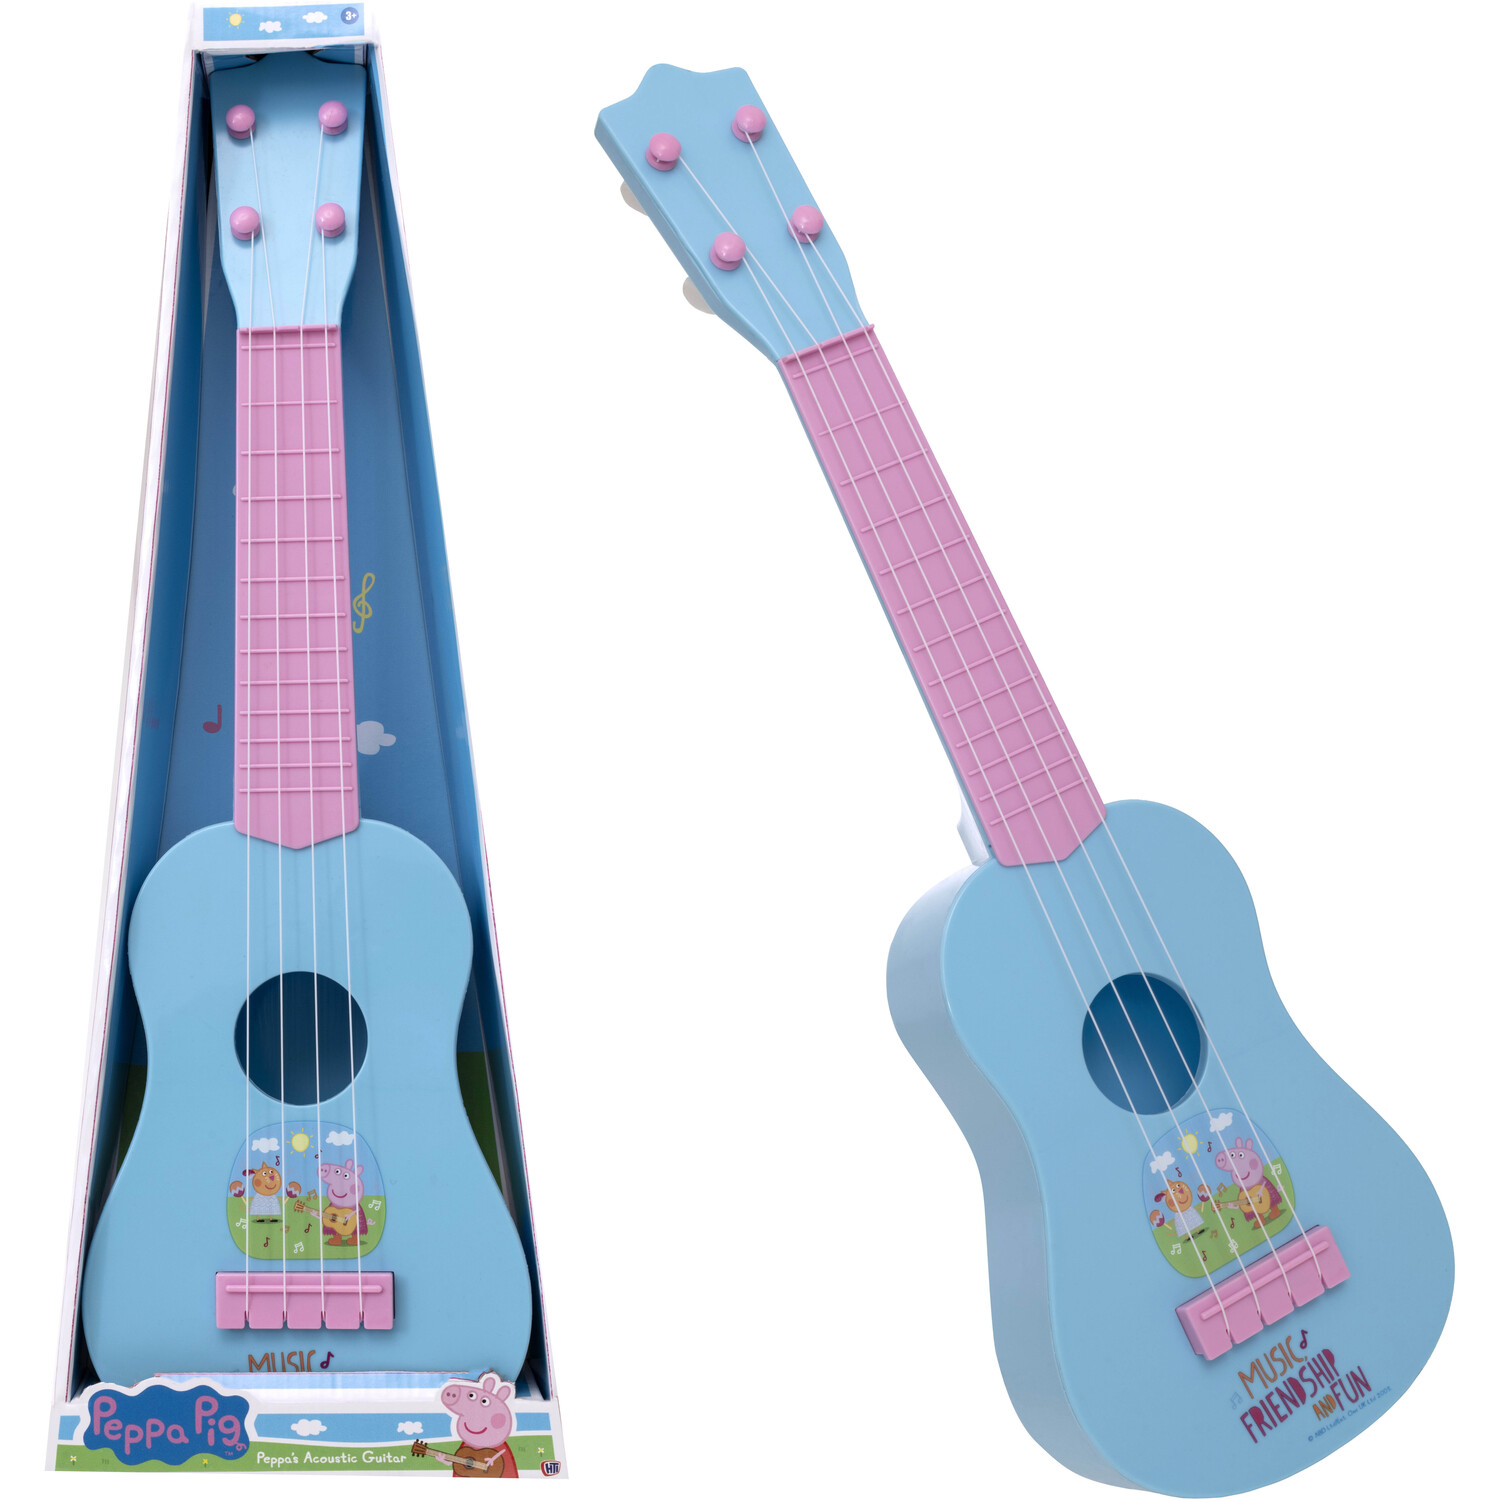 Peppa Pig Blue Acoustic Guitar Image 2